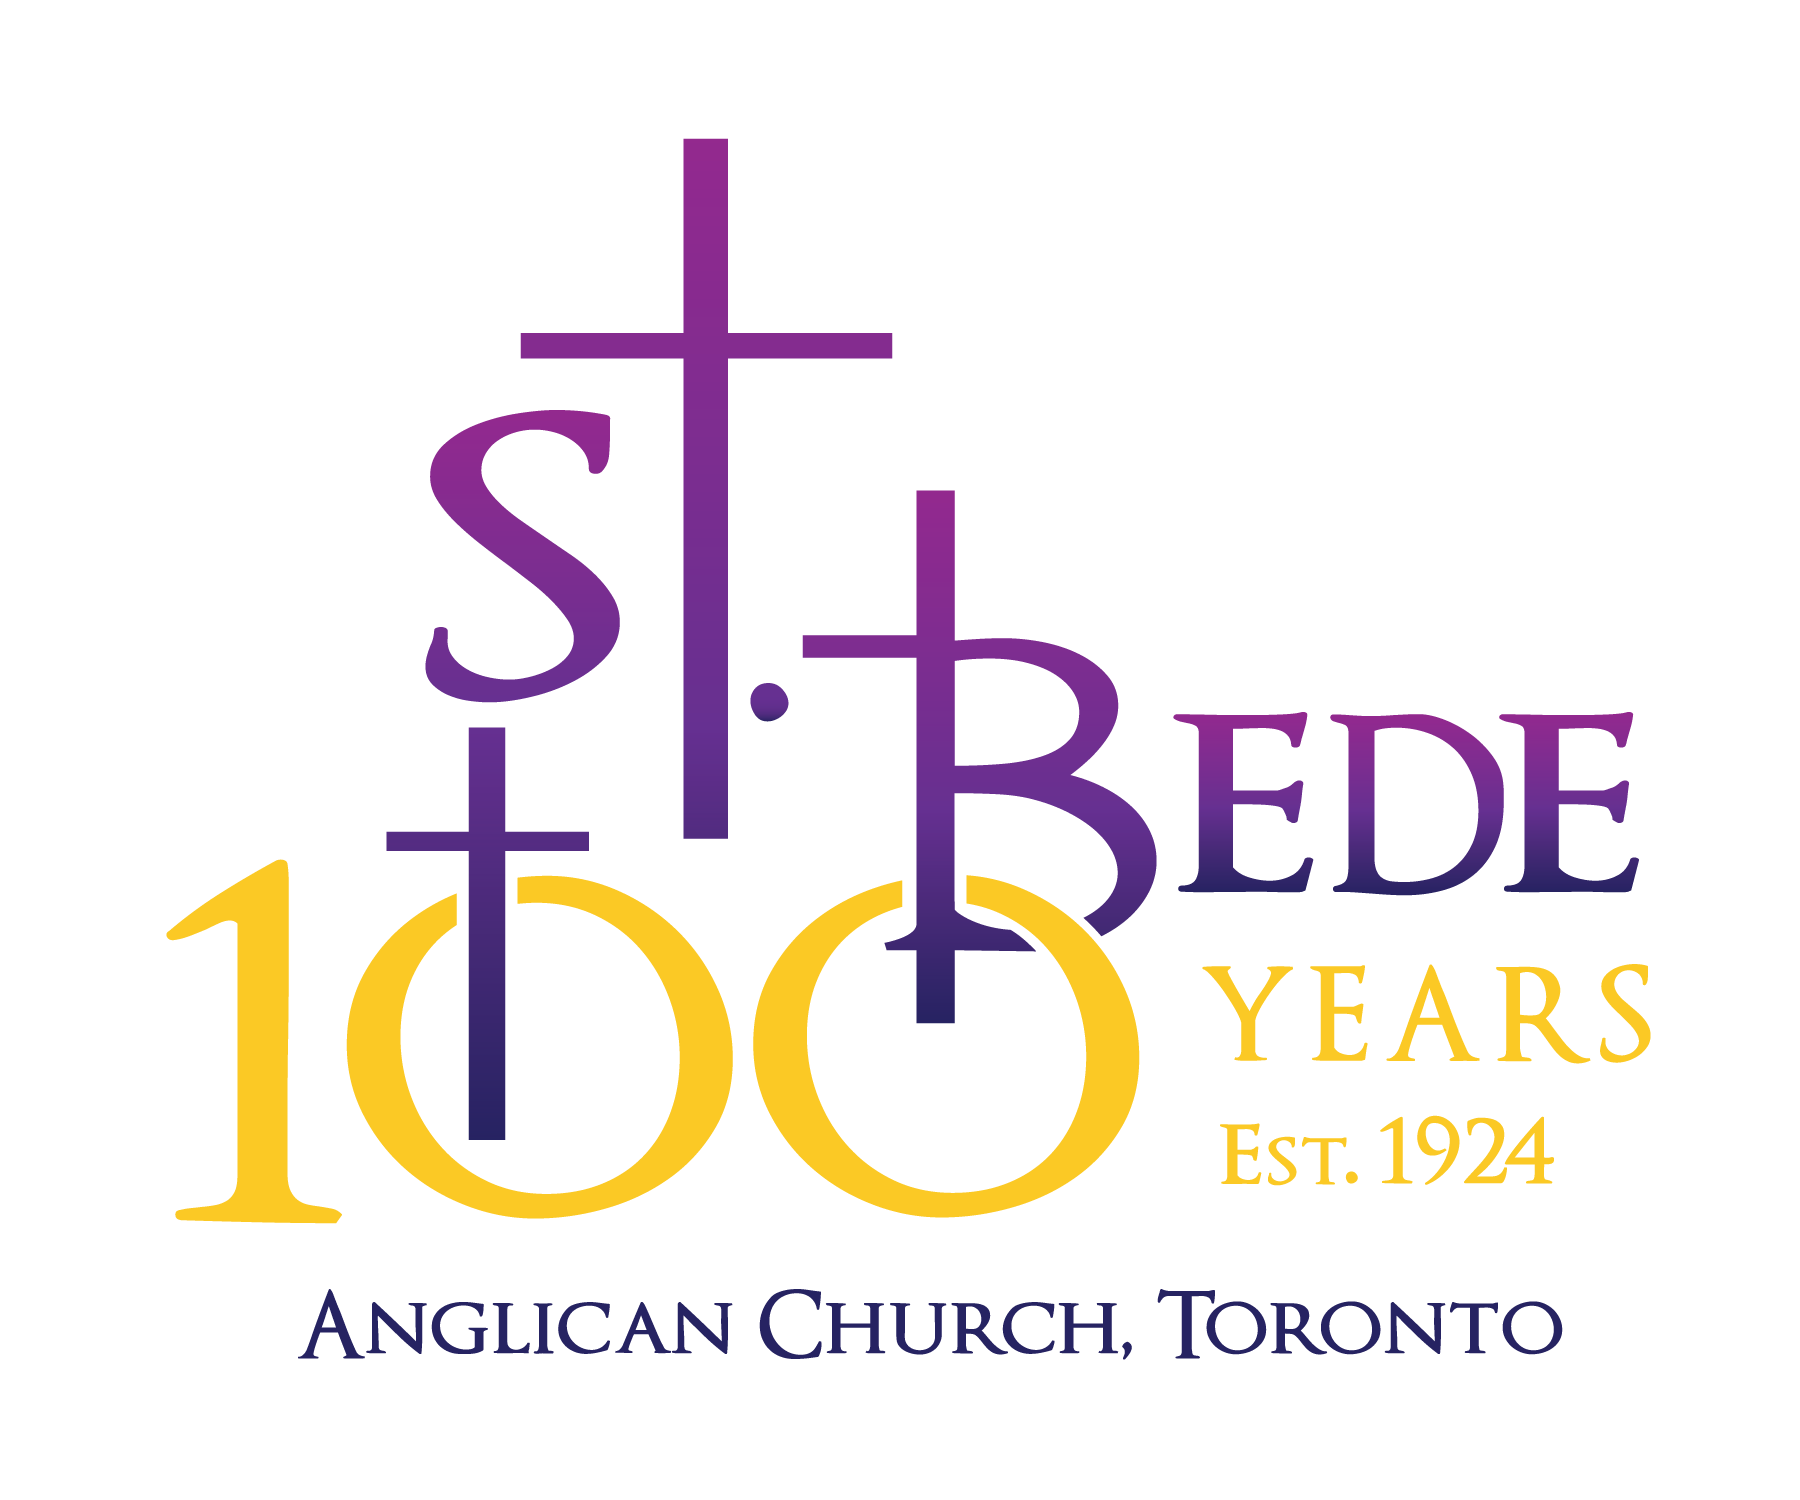 CHURCH OF ST BEDE logo